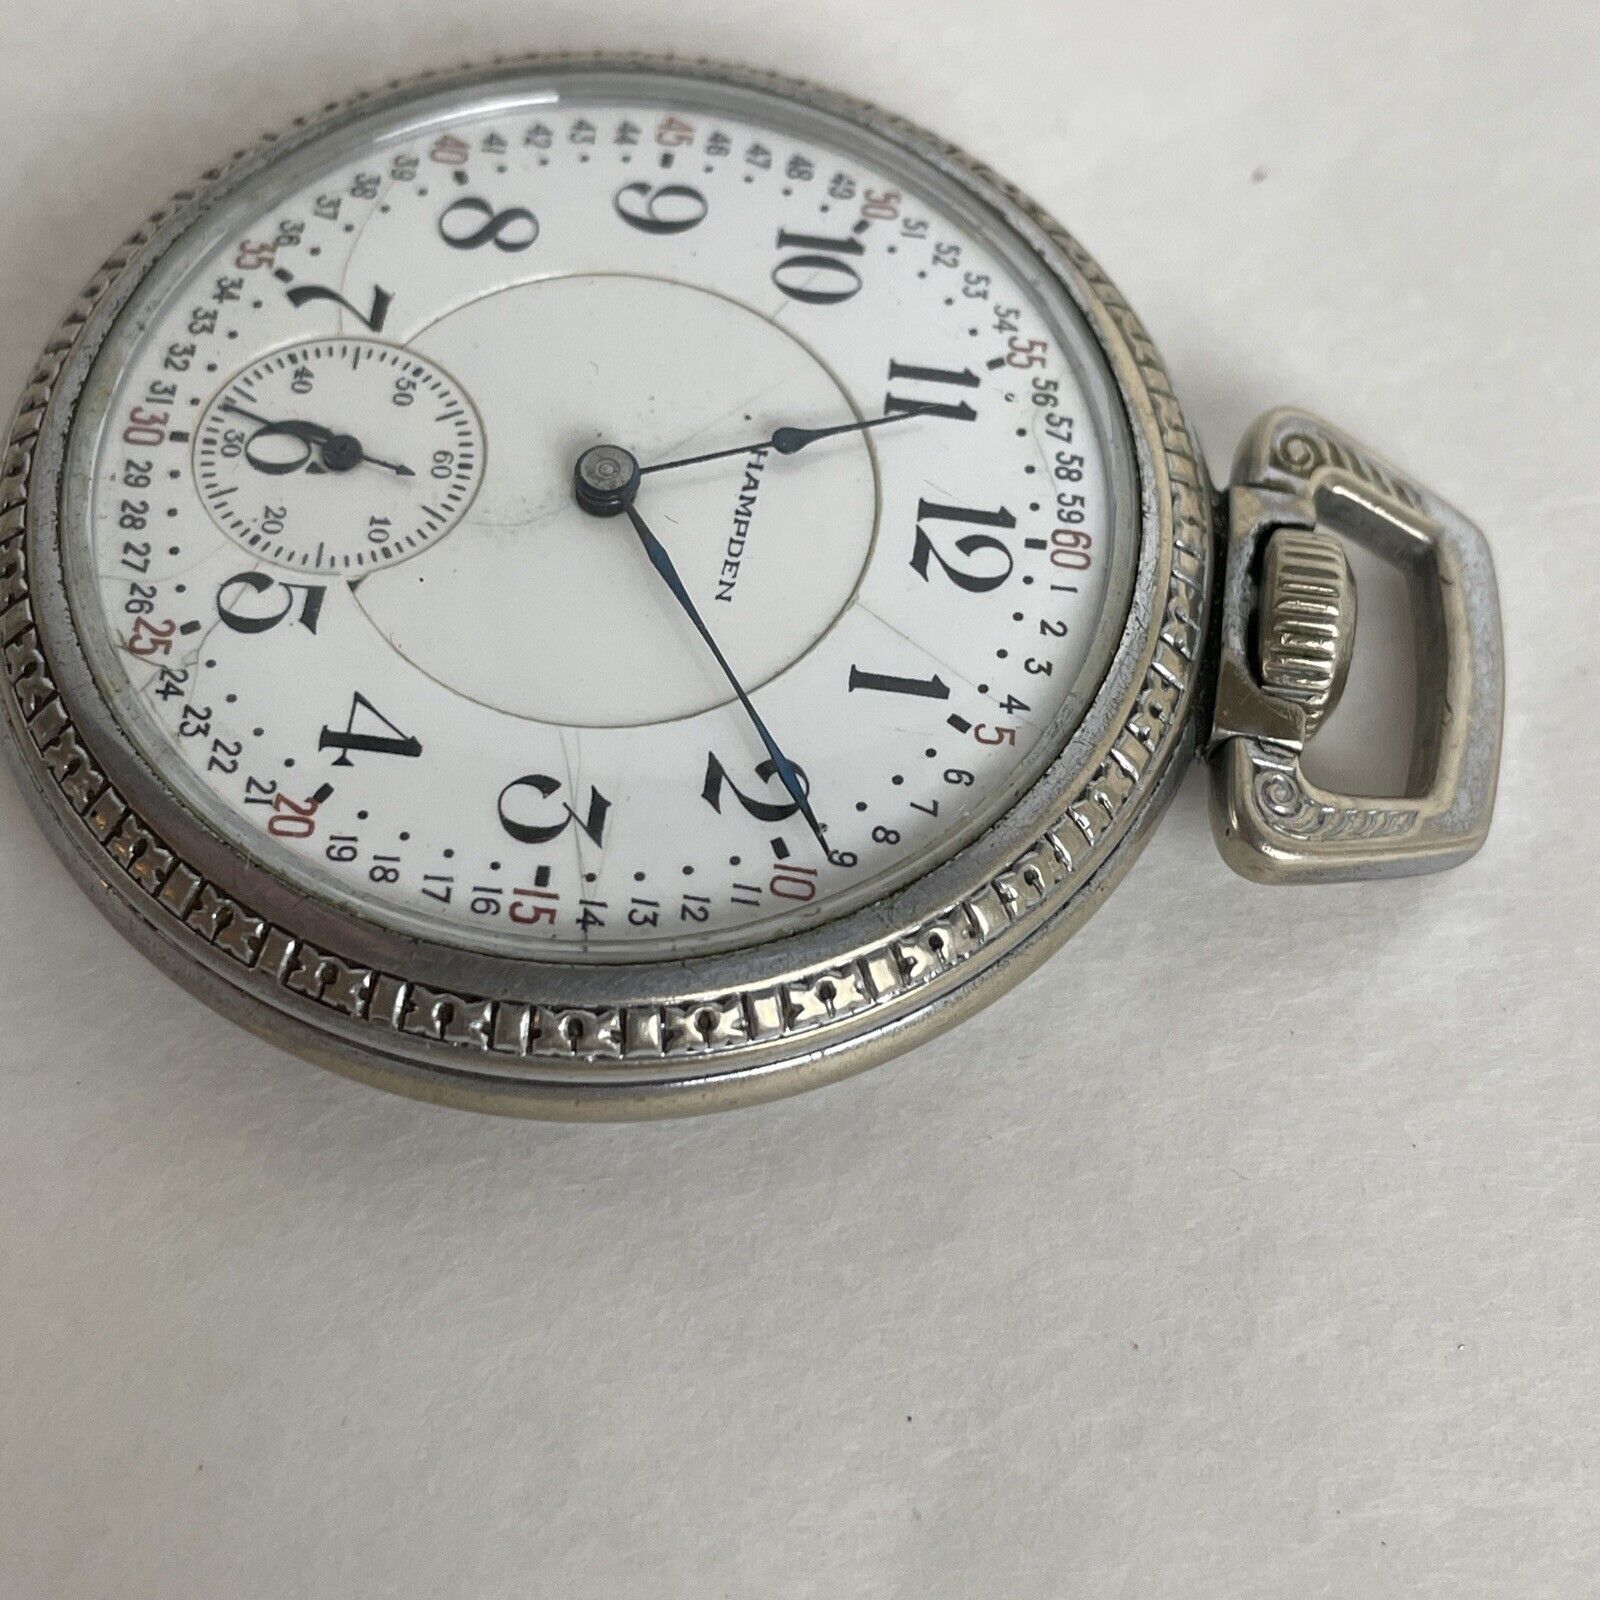 Antique Hampden Pocket Watch No 108  17 Jewel Silver Tone  Works RUNS Great